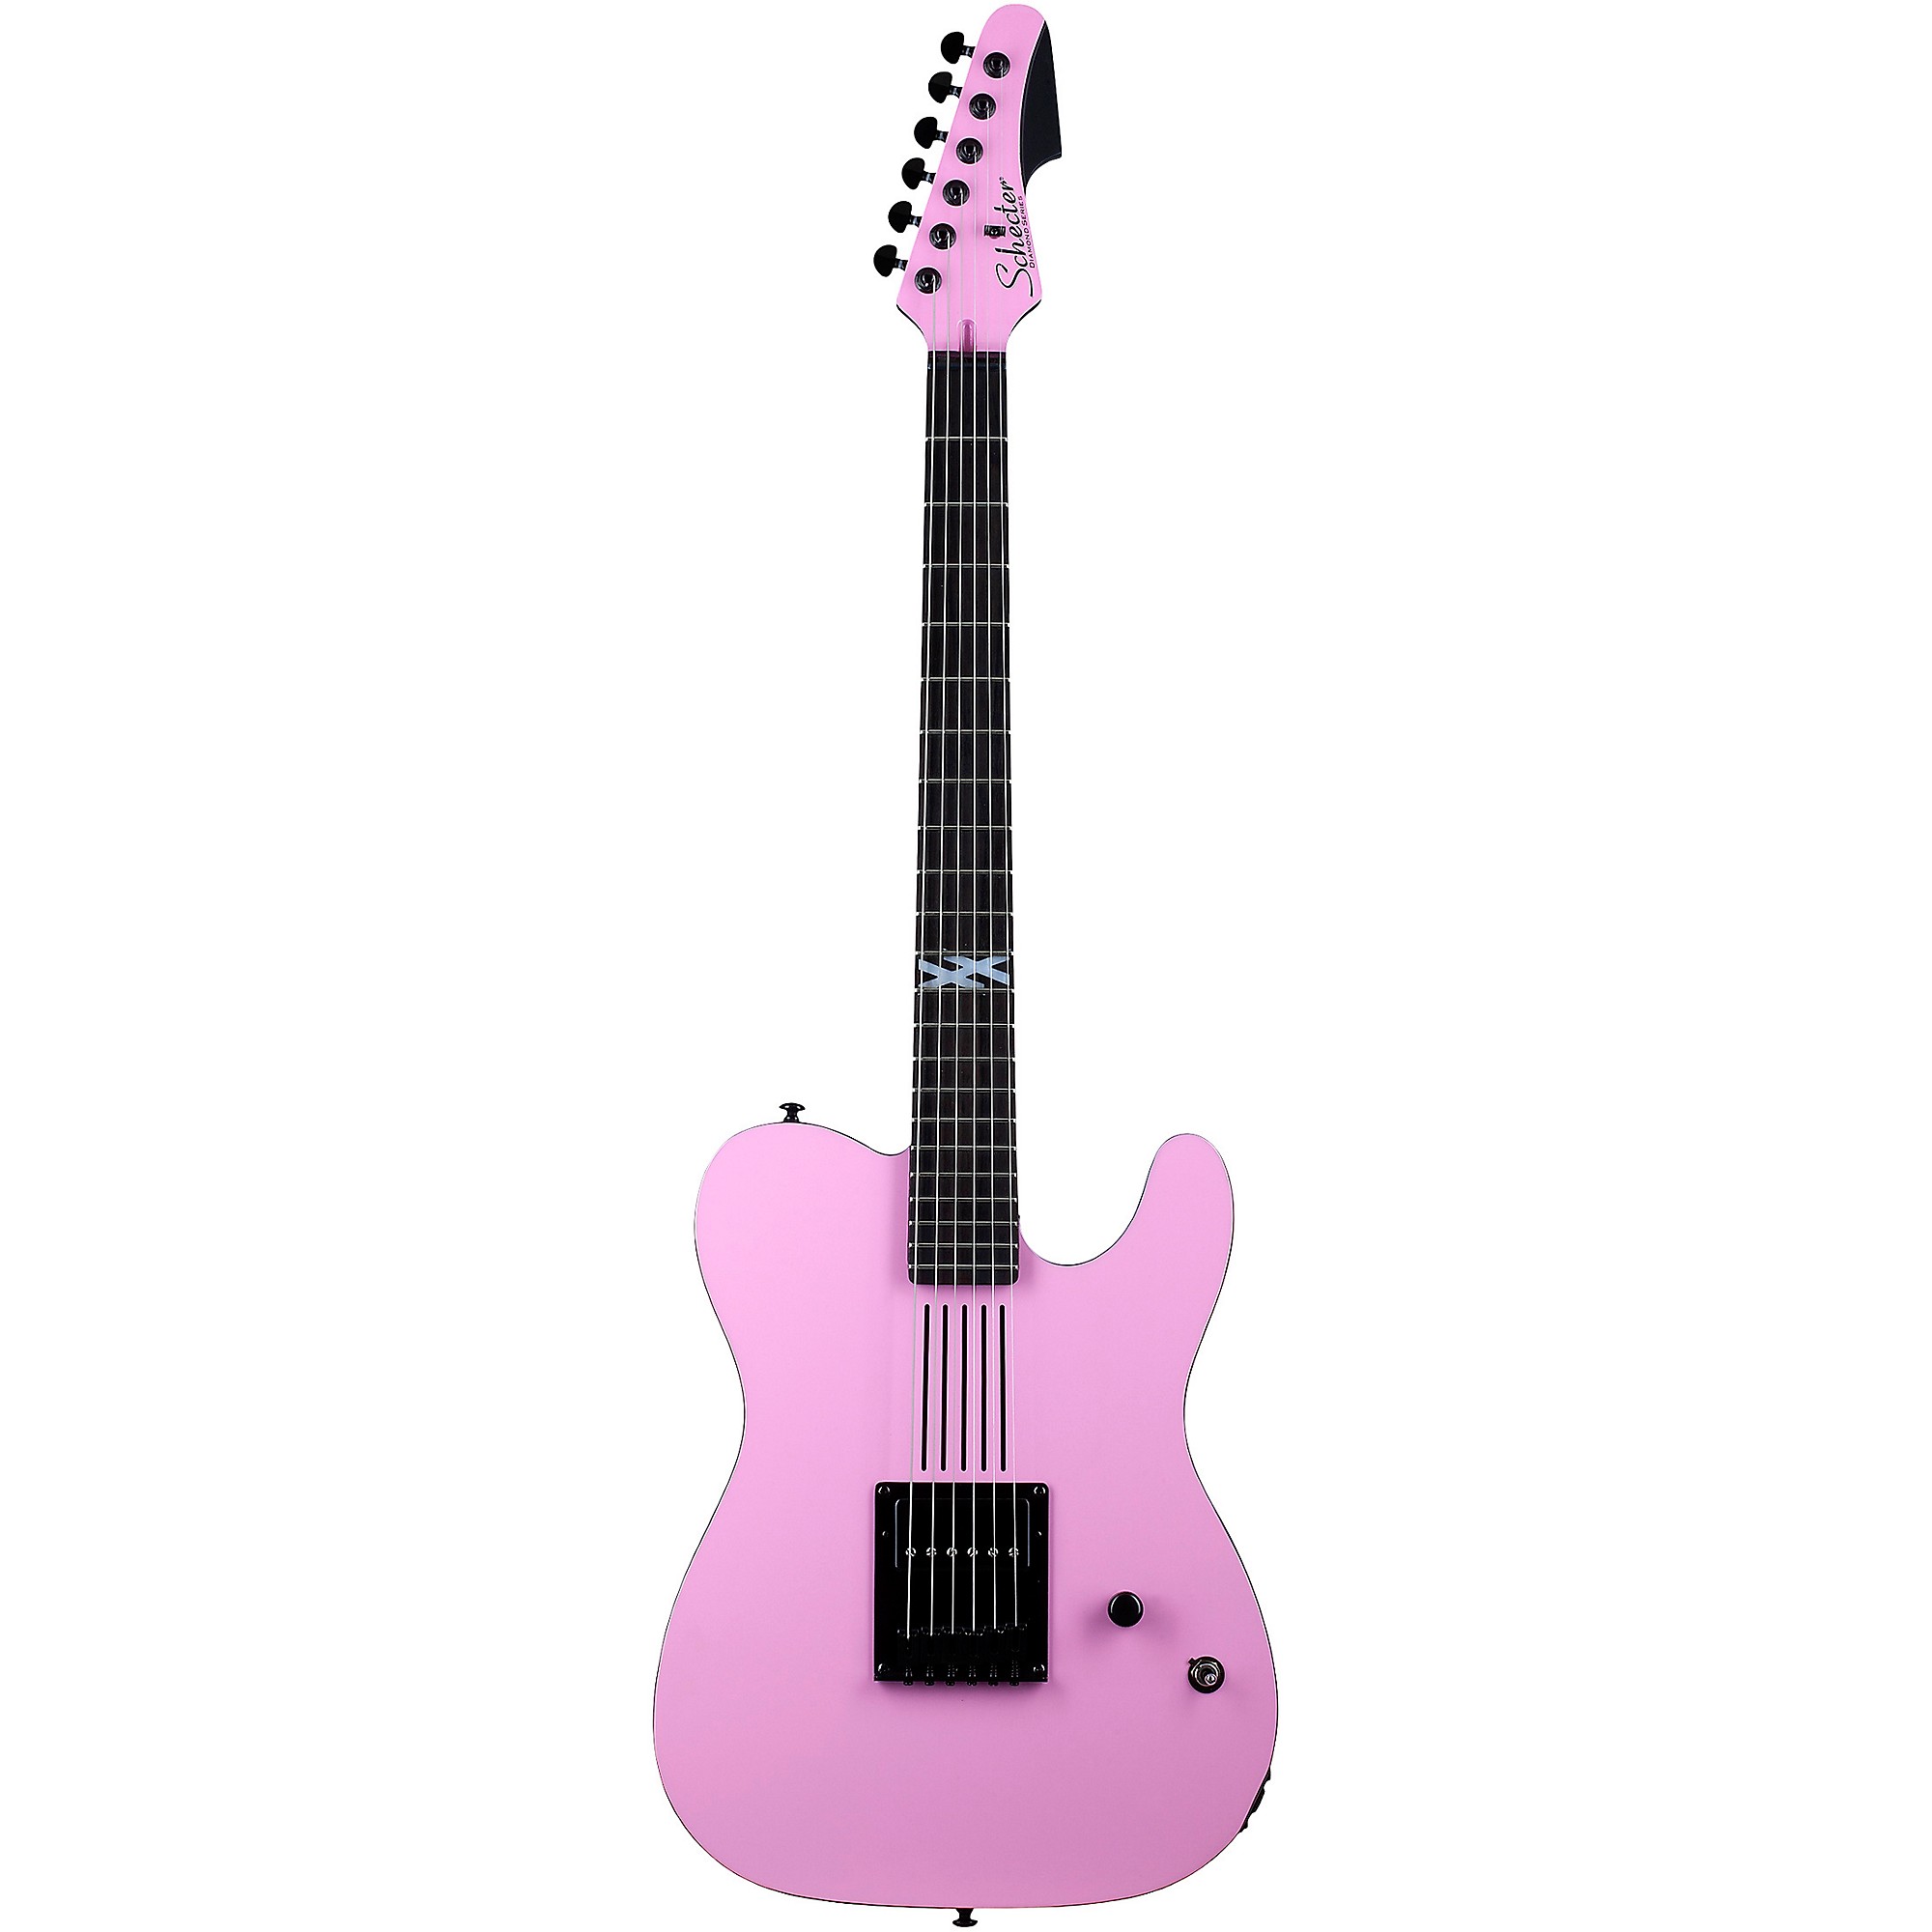 Schecter Guitar Research Machine Gun Kelly PT Электрогитара Ярко-розовый цена и фото